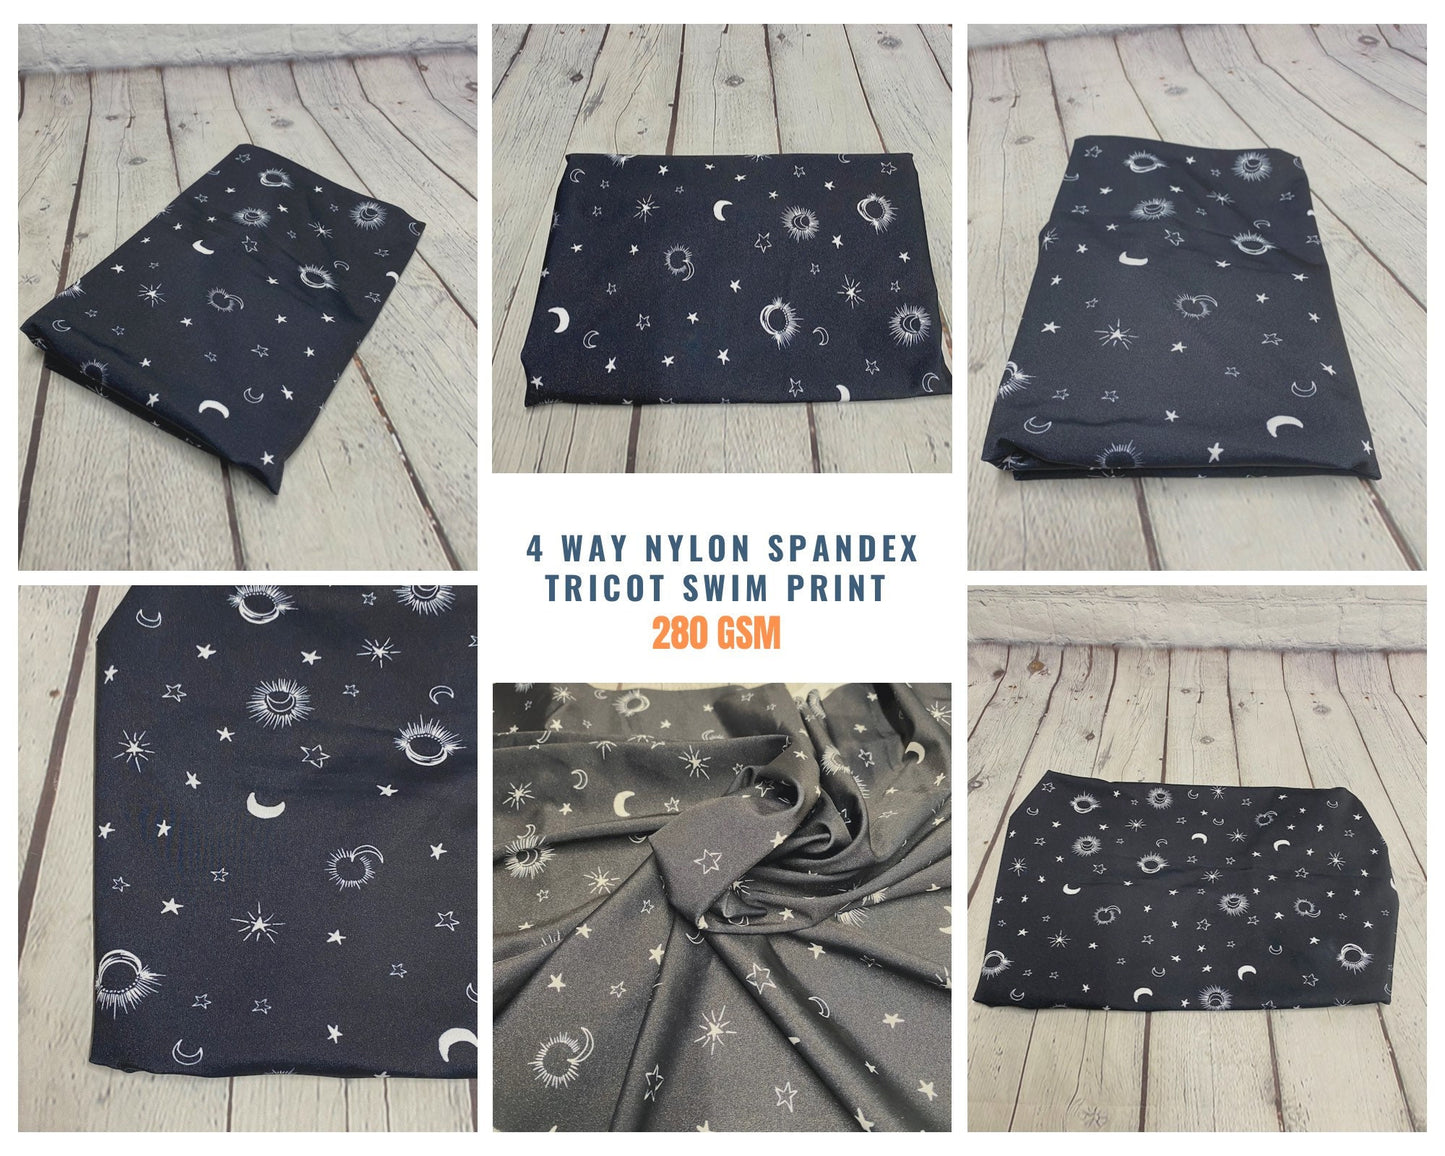 4 Way Stretch Print Nylon Spandex Fabric By The Yard Tricot Swim Wear Bikini Active Wear Crescent Moon Galaxy Star Print 280 GSM